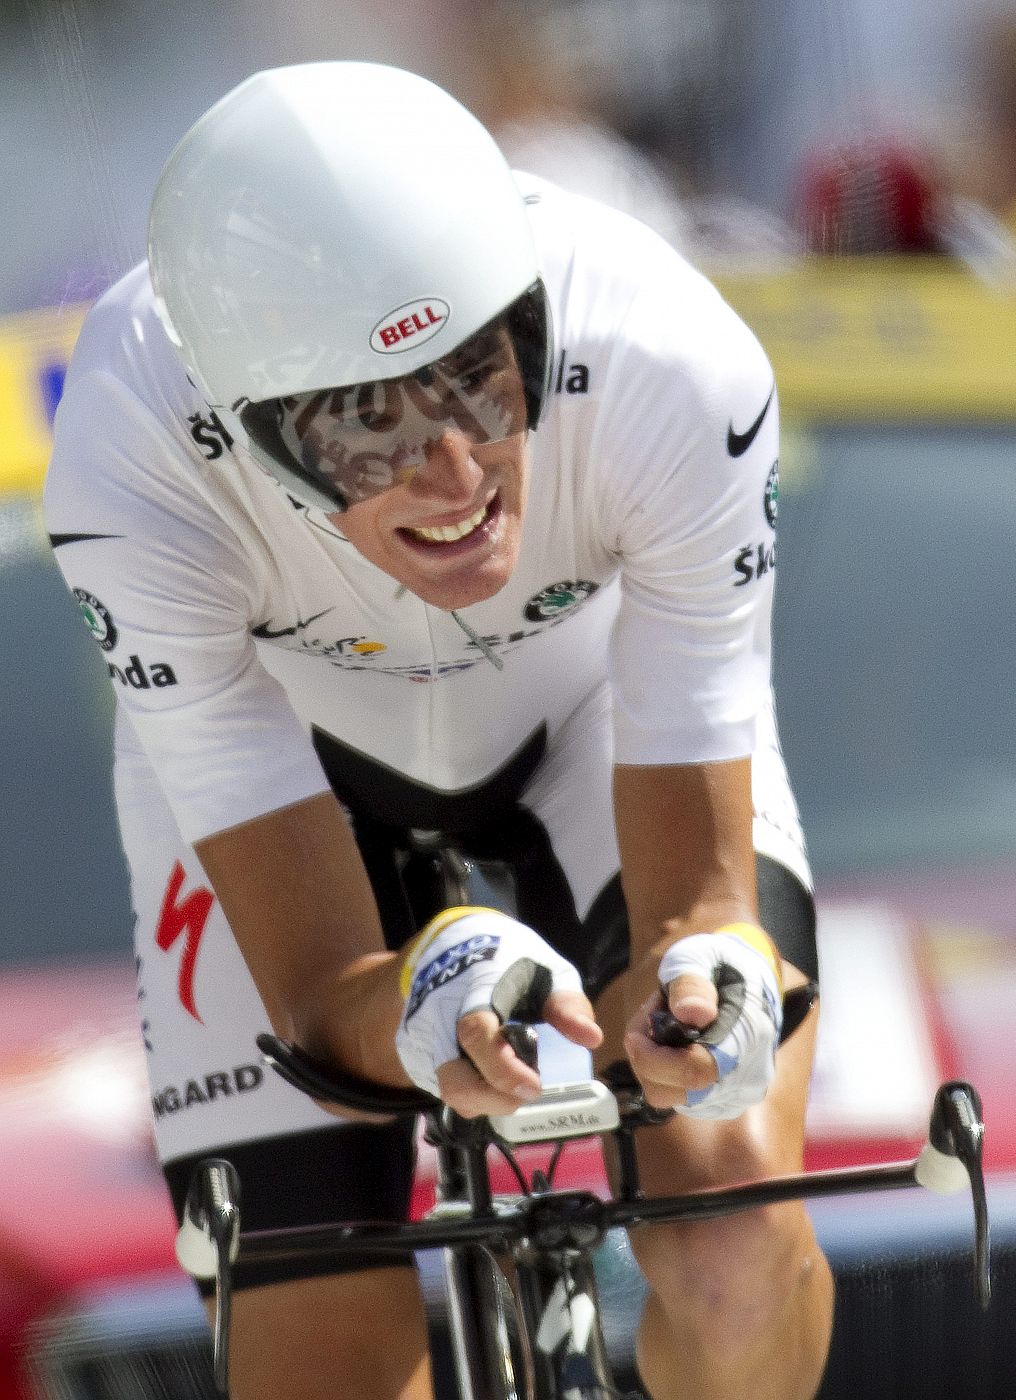 El ciclista luxemburgués Andy Schleck, del equipo Saxo Bank, pedalea durante la decimonovena etapa del Tour de Francia.